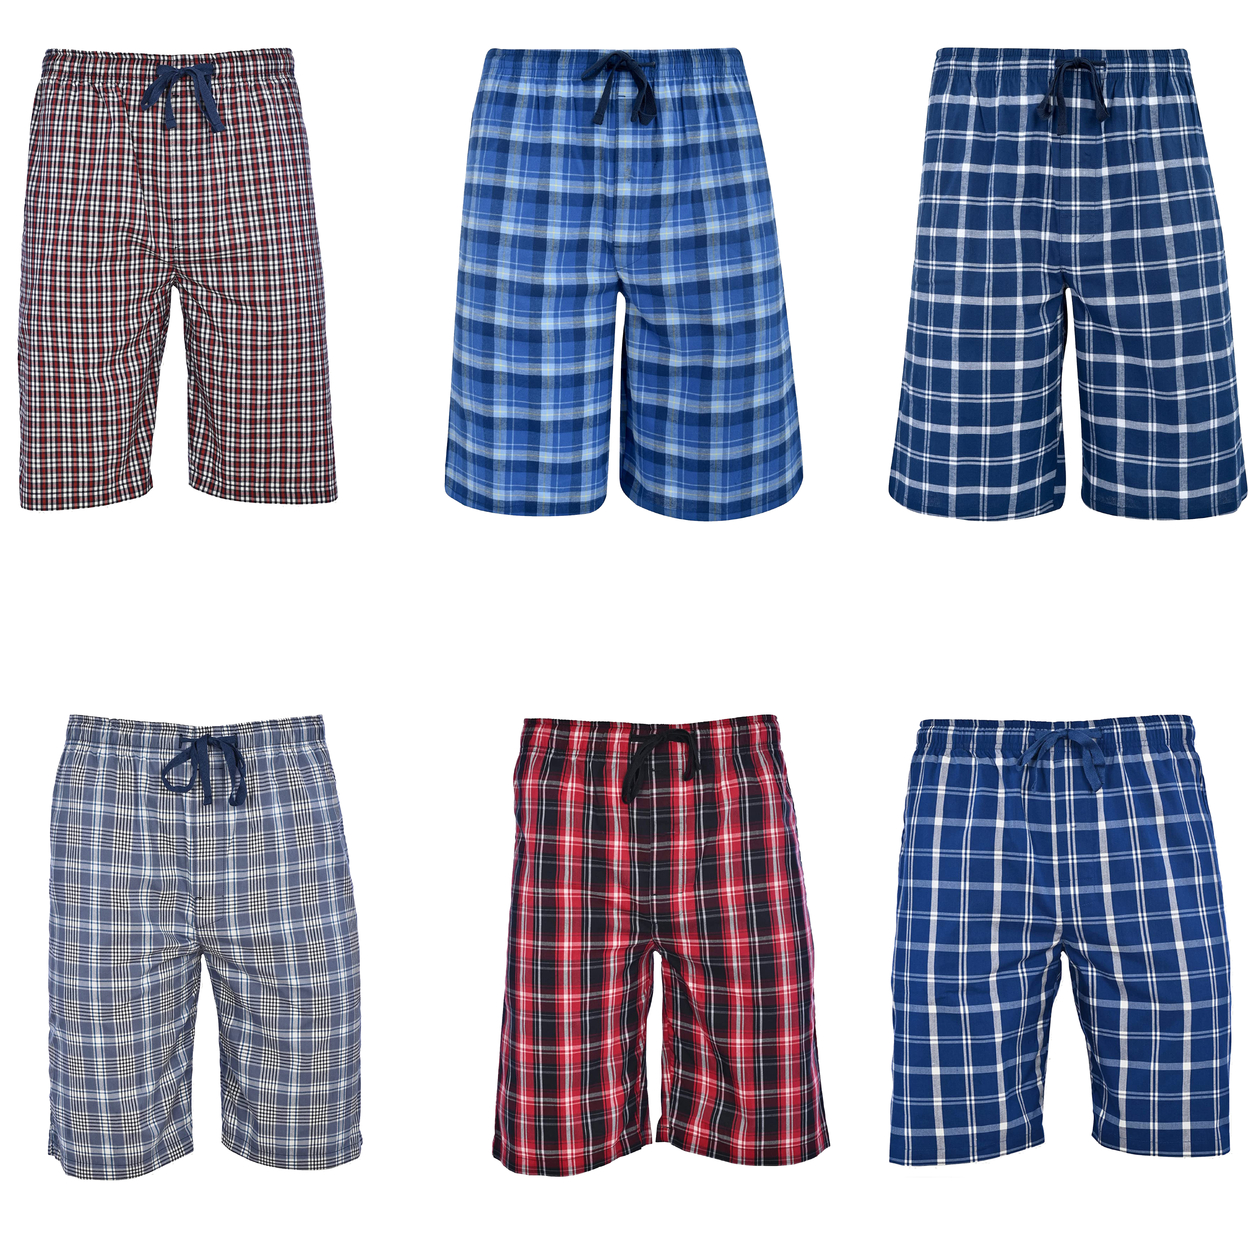 2-Pack: Men's Ultra Soft Plaid Lounge Pajama Sleep Wear Shorts - Black & Blue, Small